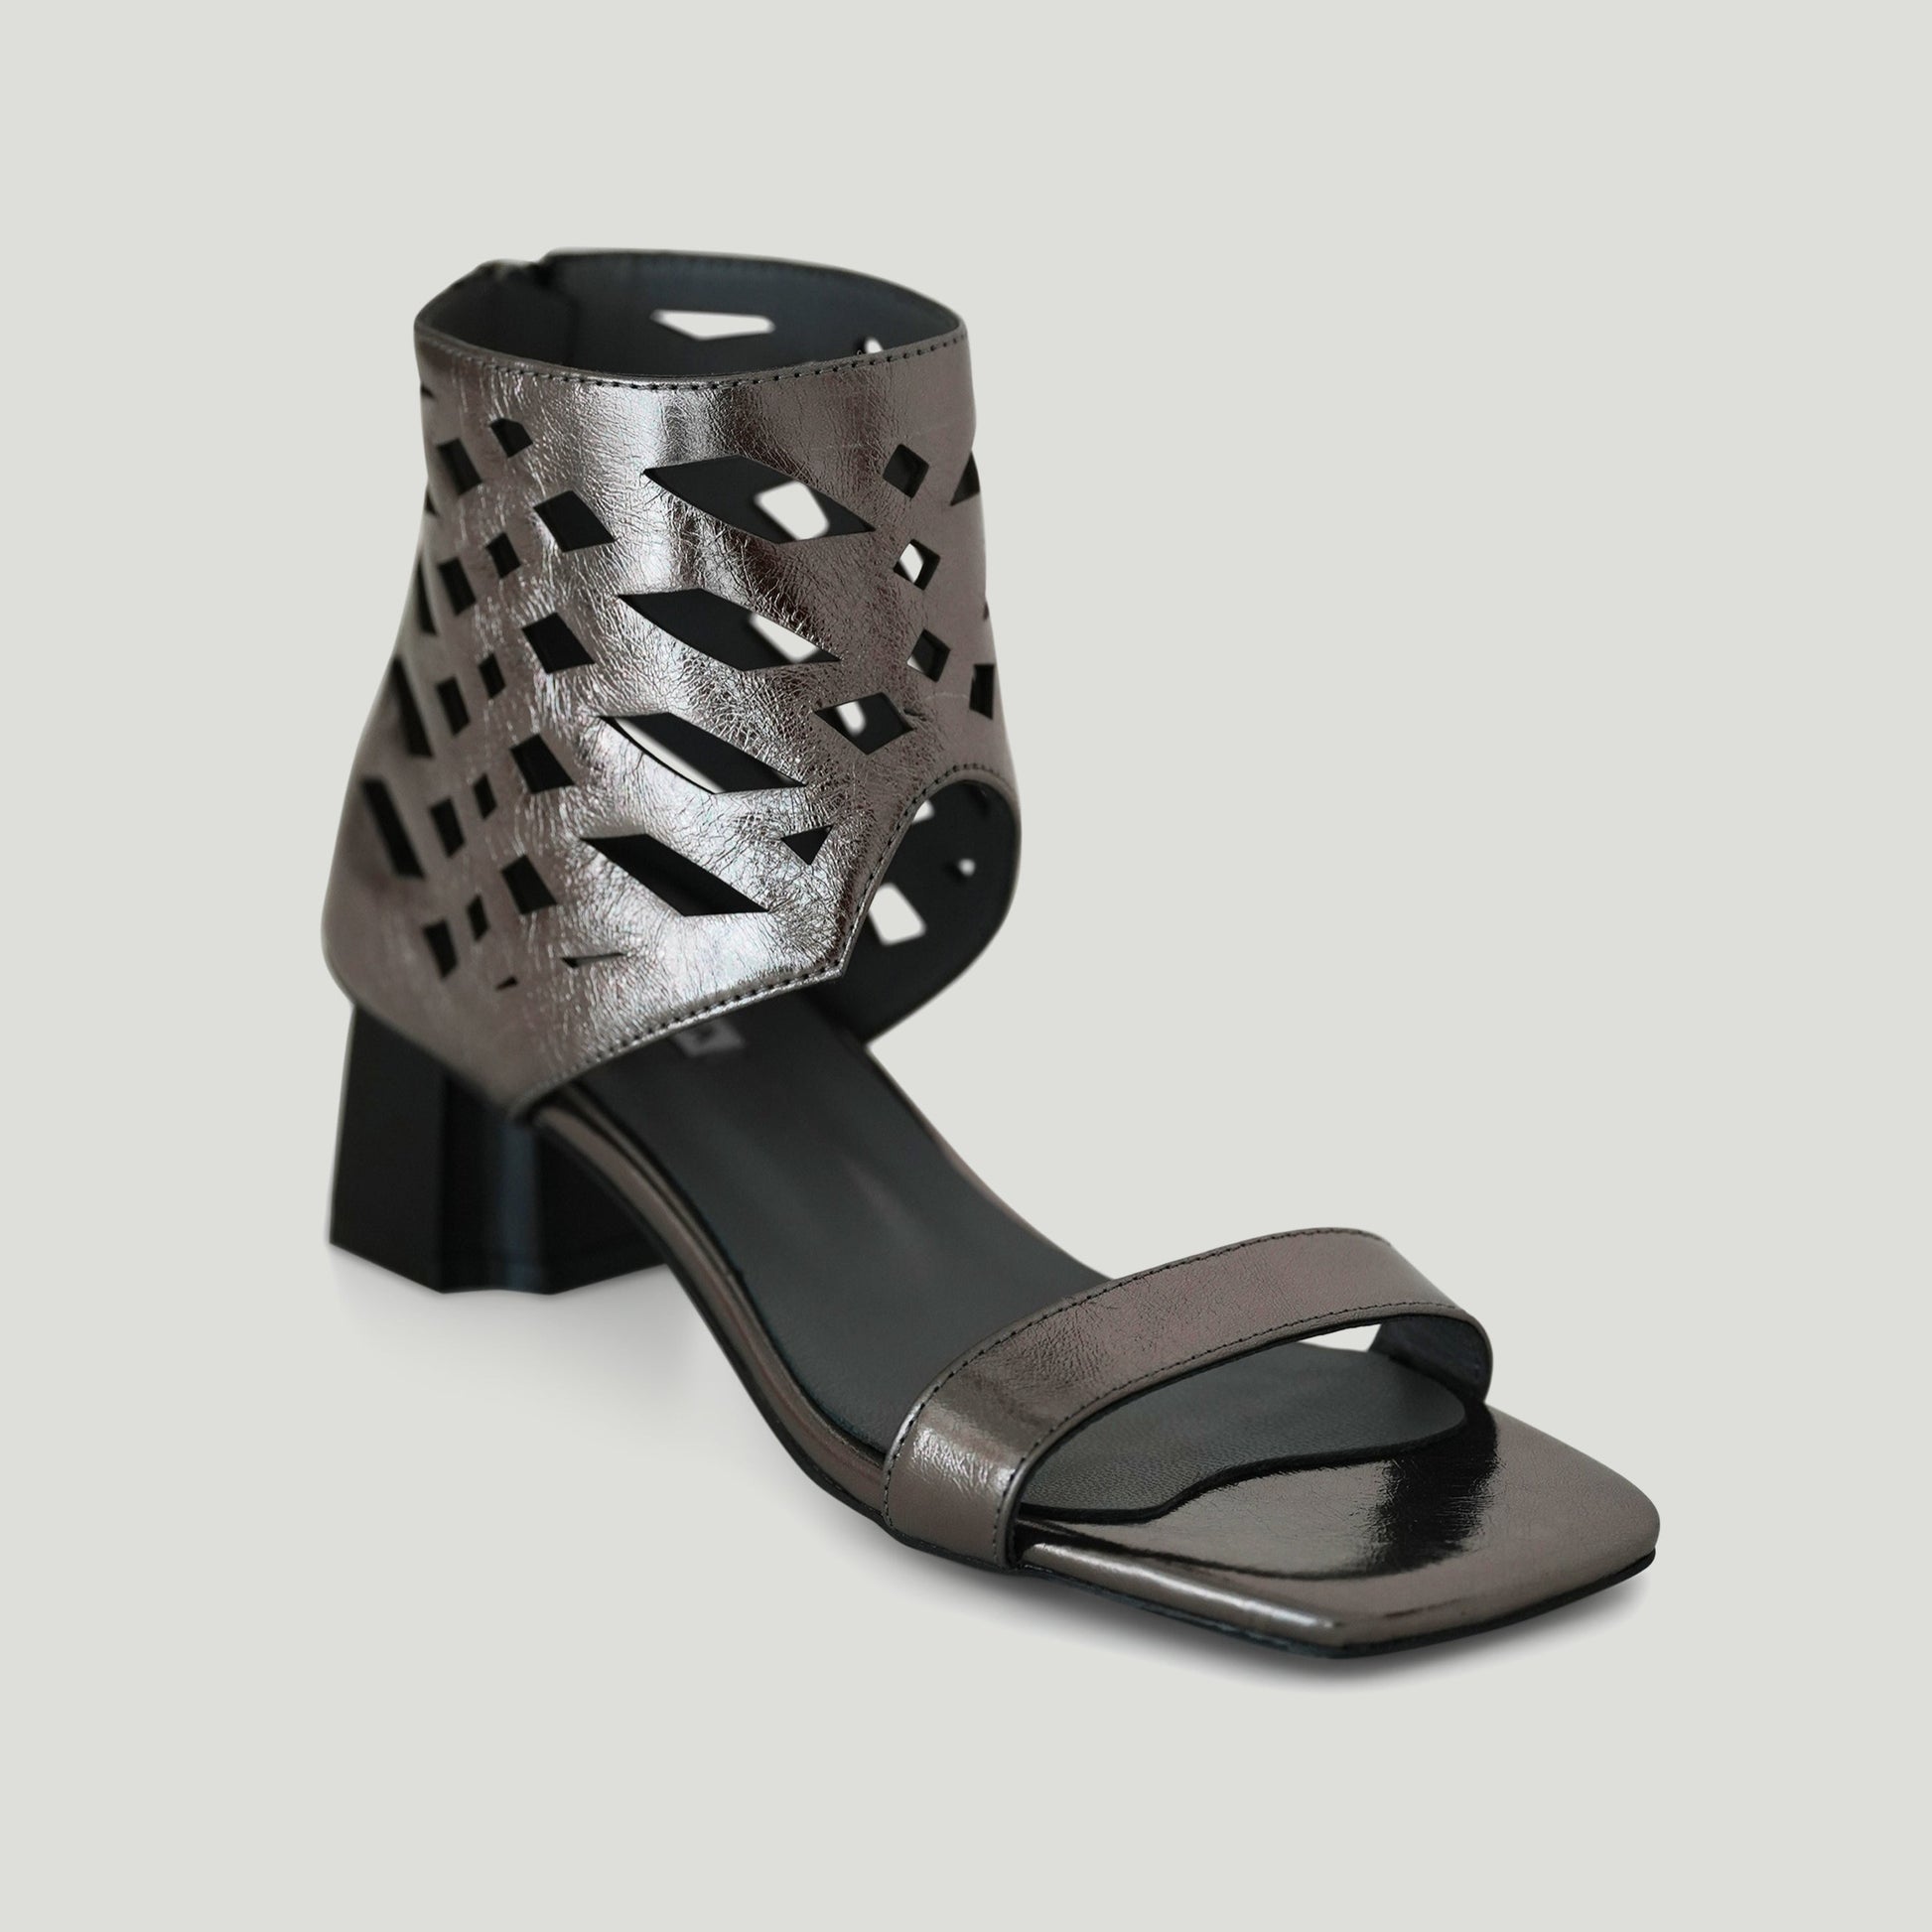 Kaya silver sandal - Heels - kuwait - Ksa- shoes